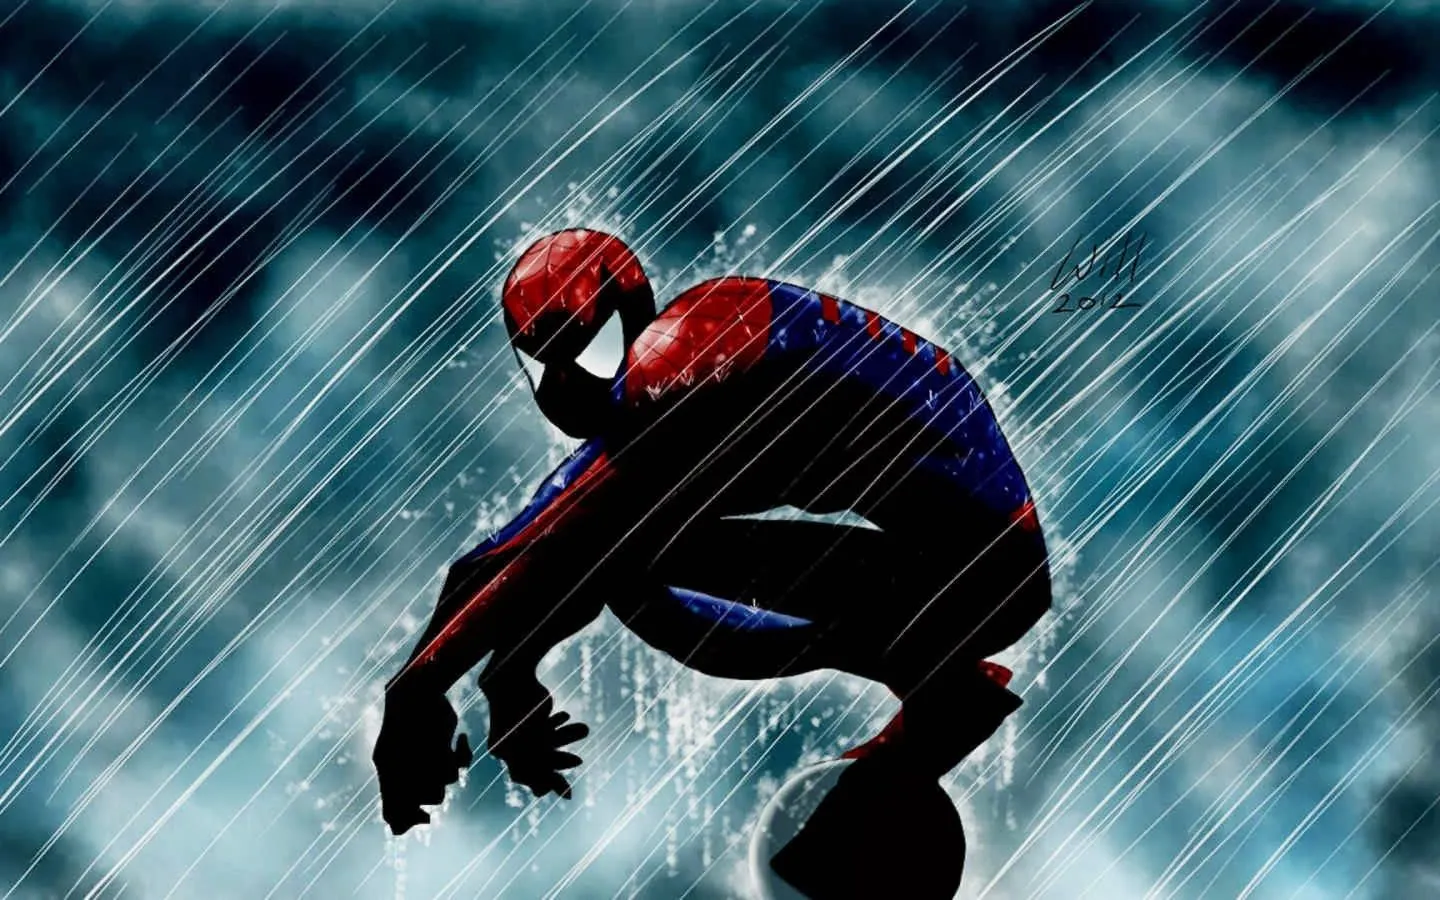 Mil Fondos de Pantalla Para Ti: Spider-Man - El Hombre Araña